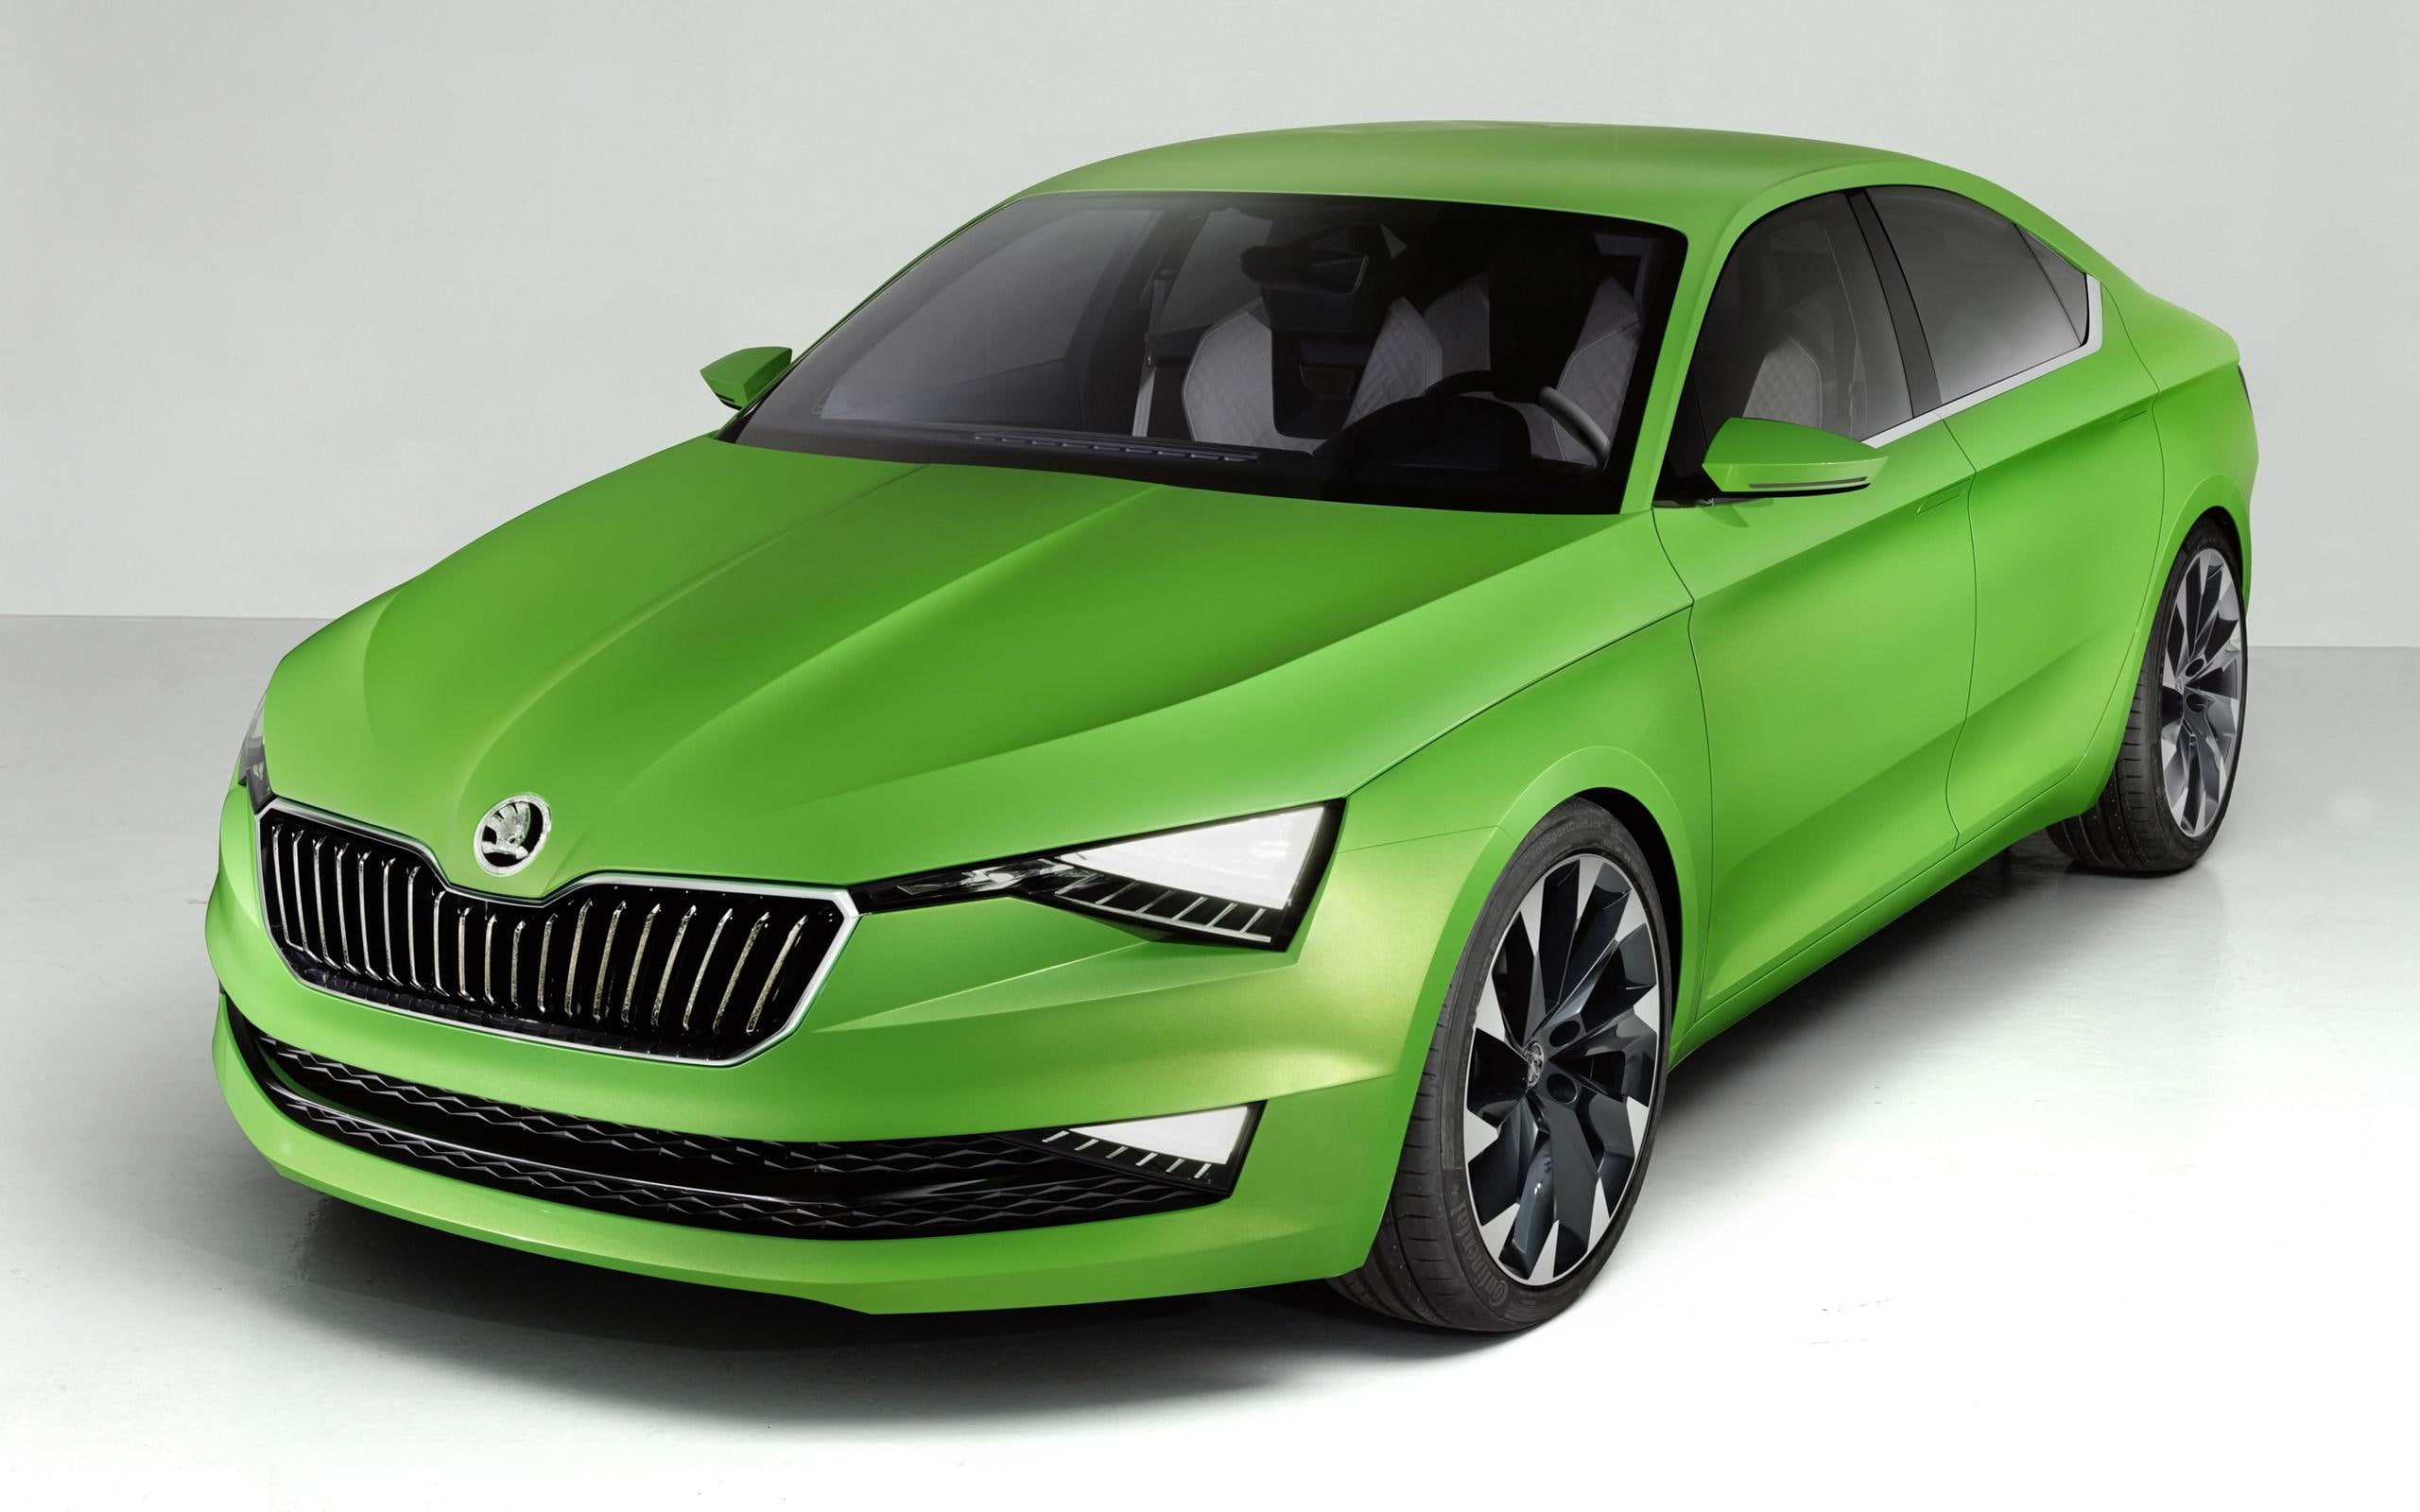 2014 Skoda VisionC Concept, green skoda car, cars, other cars